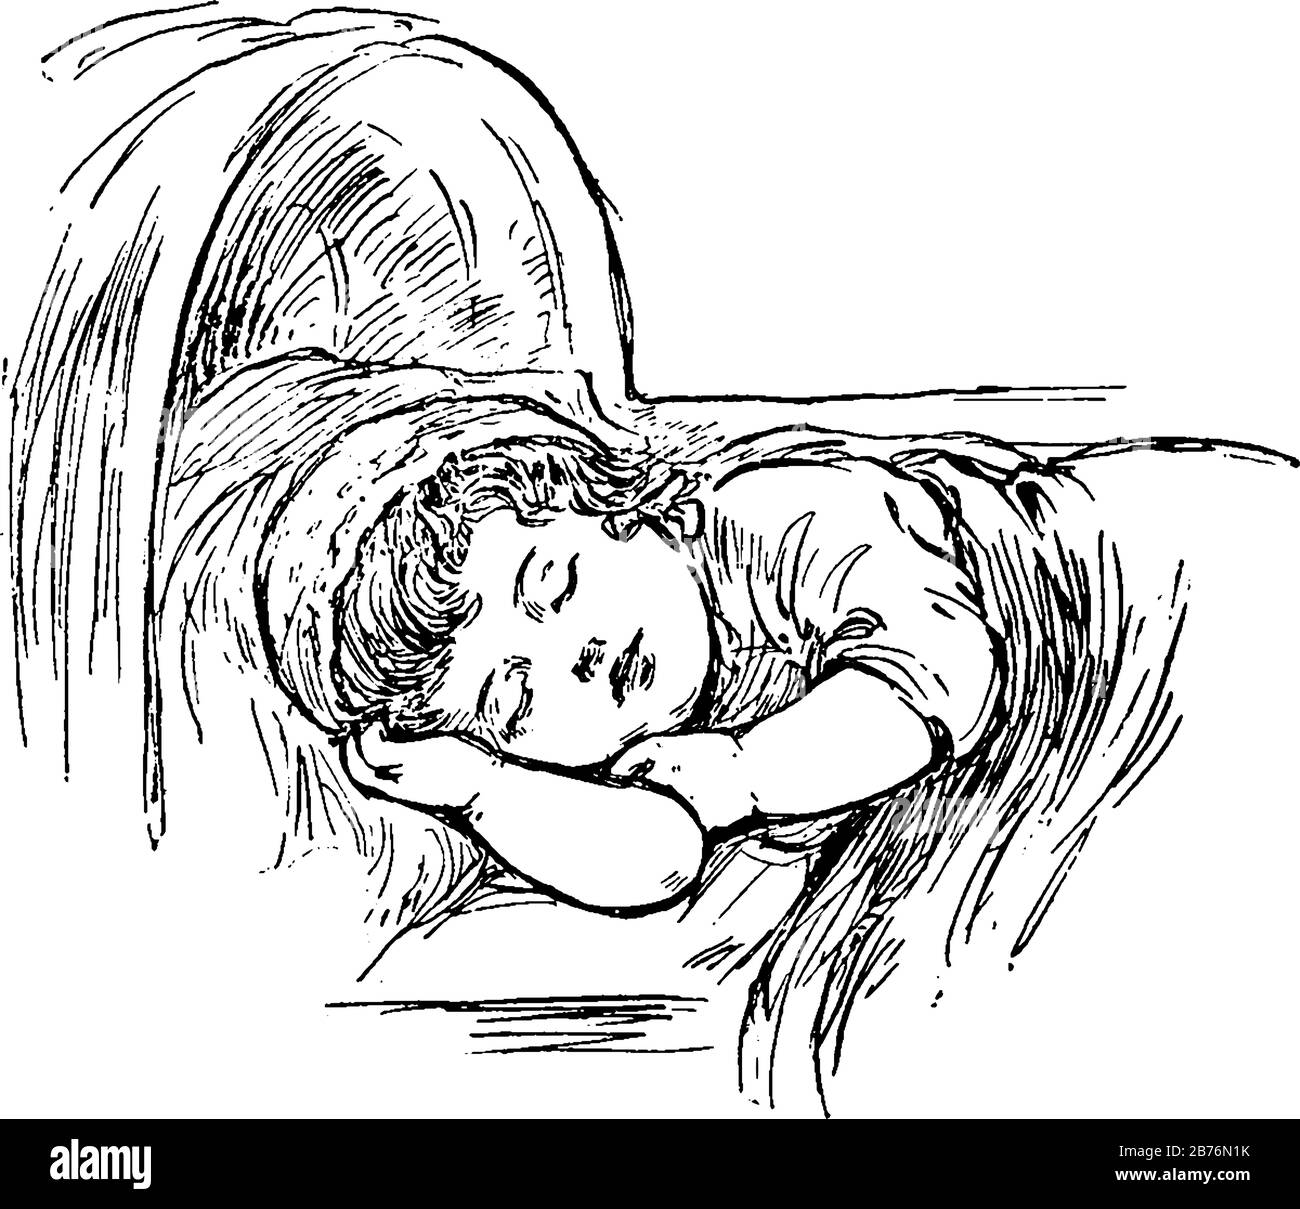 sleeping boy by un-understandable on DeviantArt